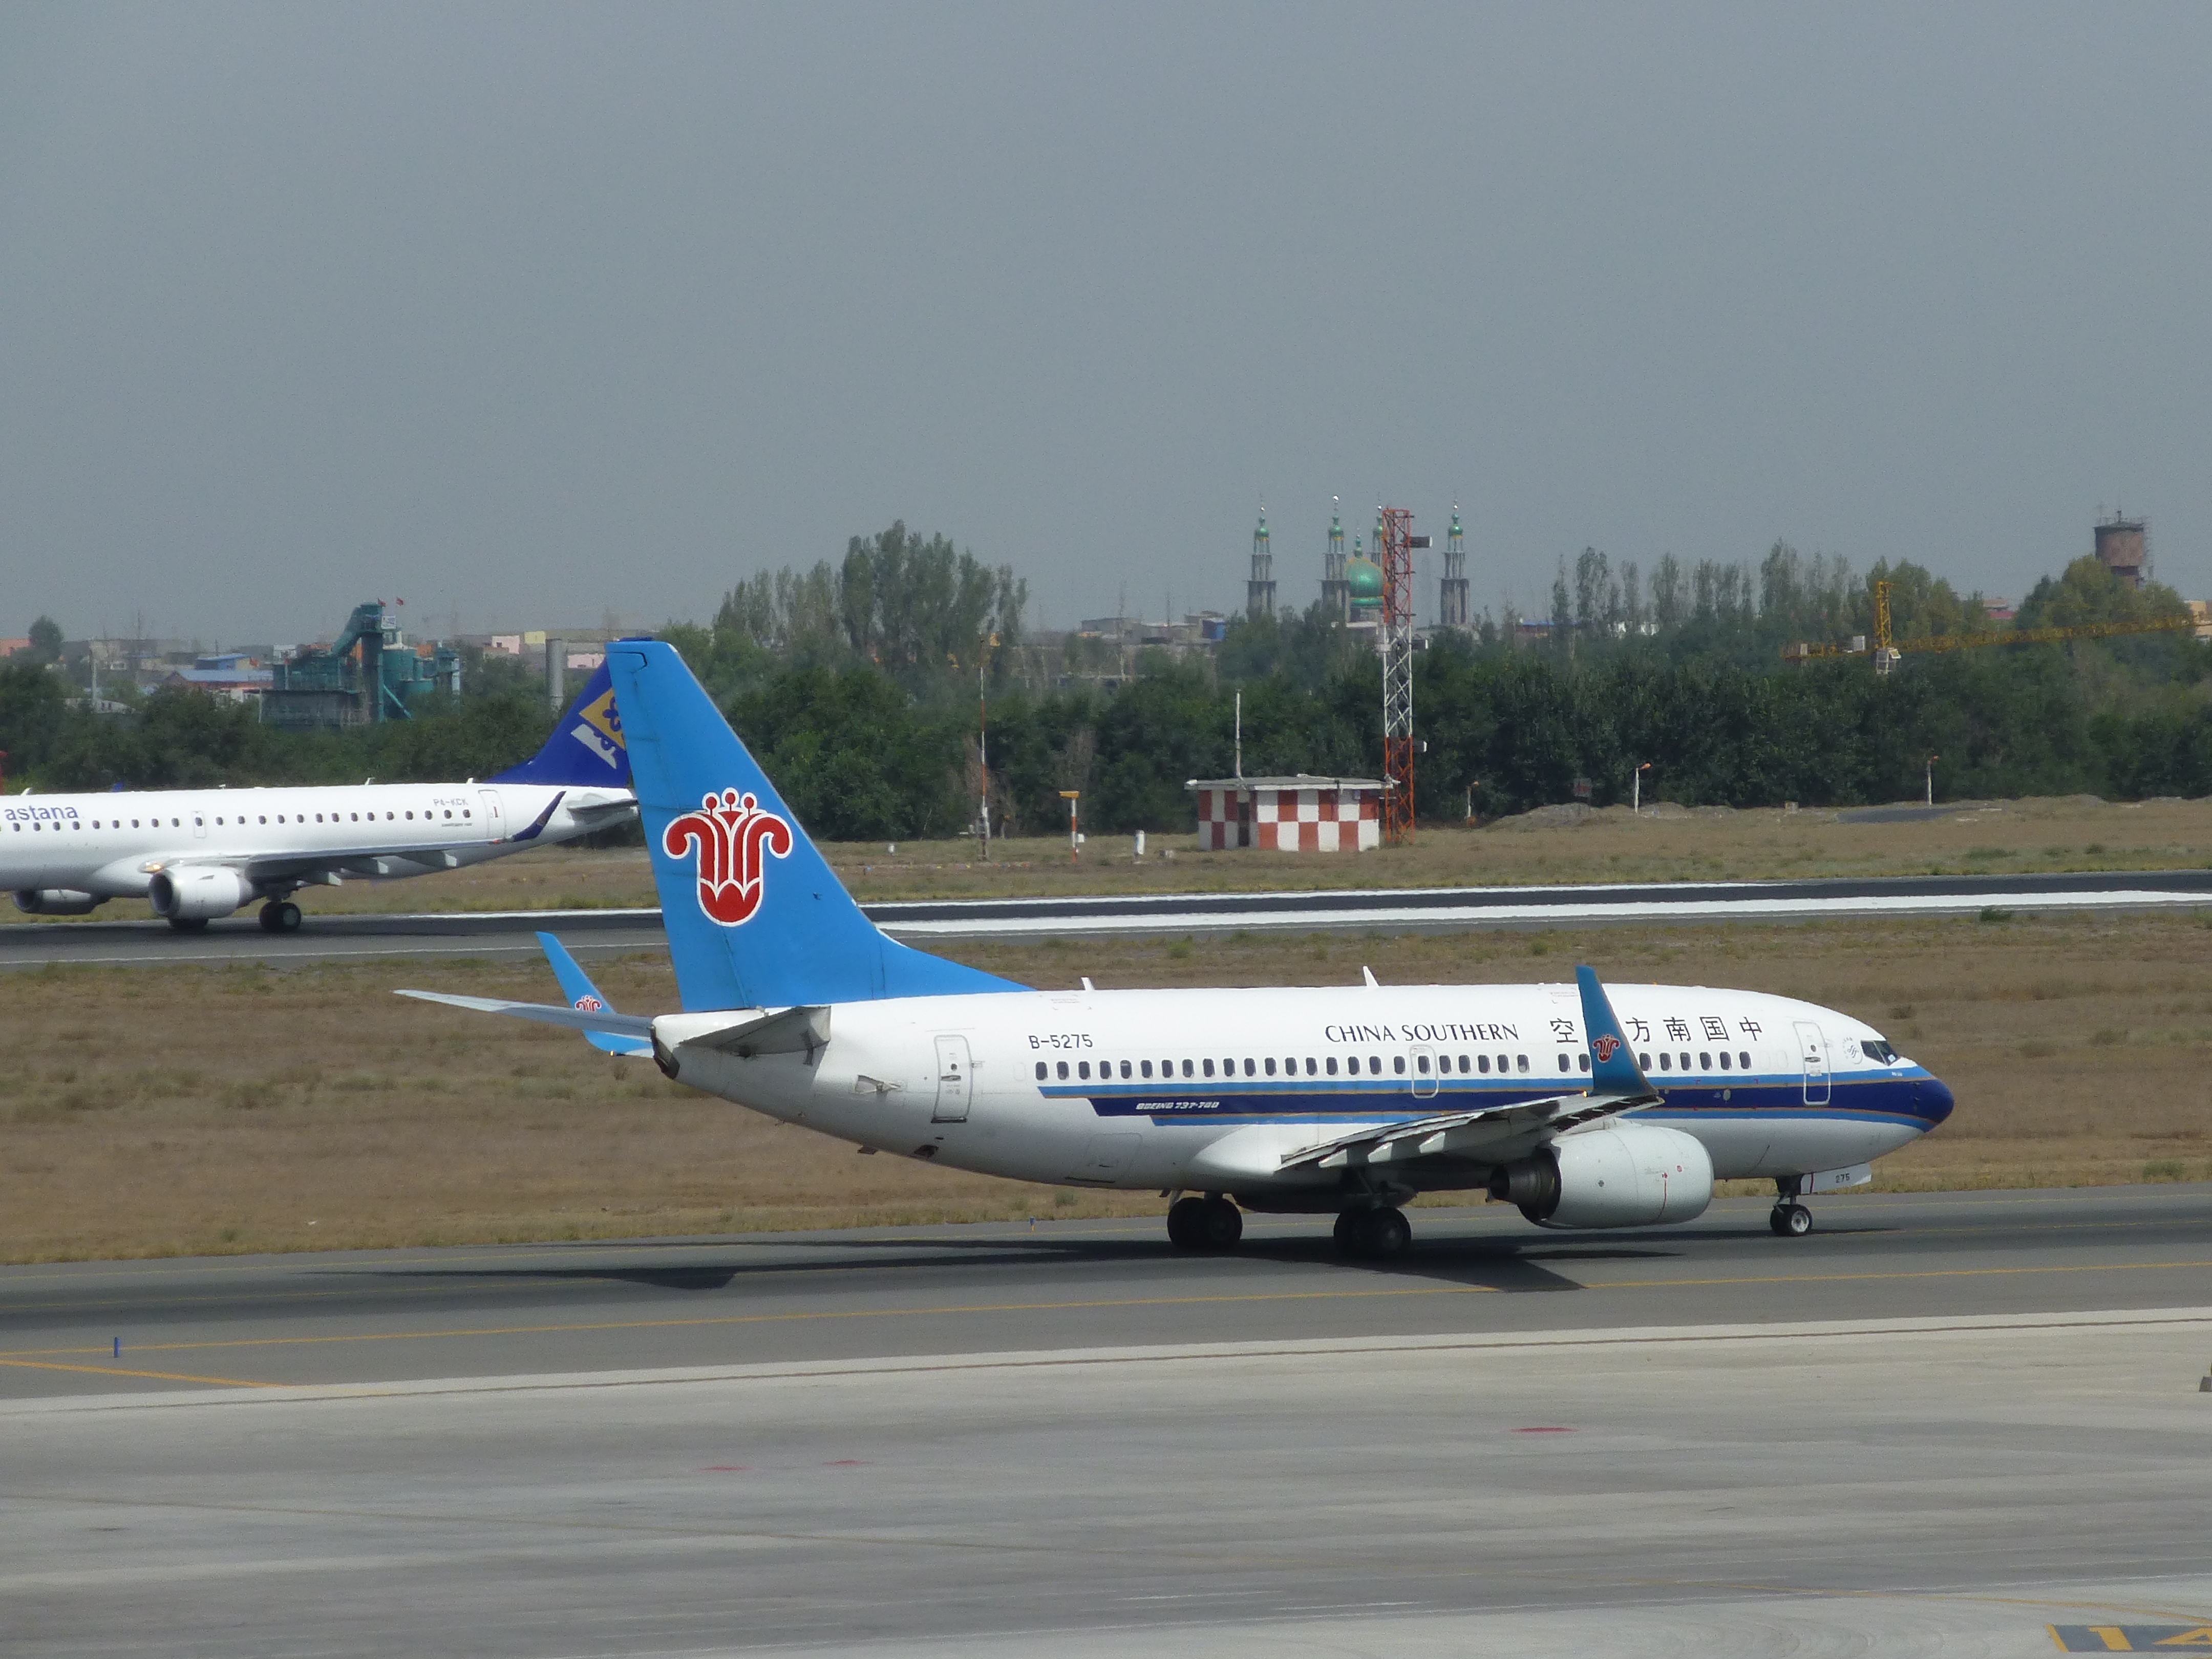 File:中国南方航空Boeing 737-700 B-5275客机，摄于乌鲁木齐机场.JPG 